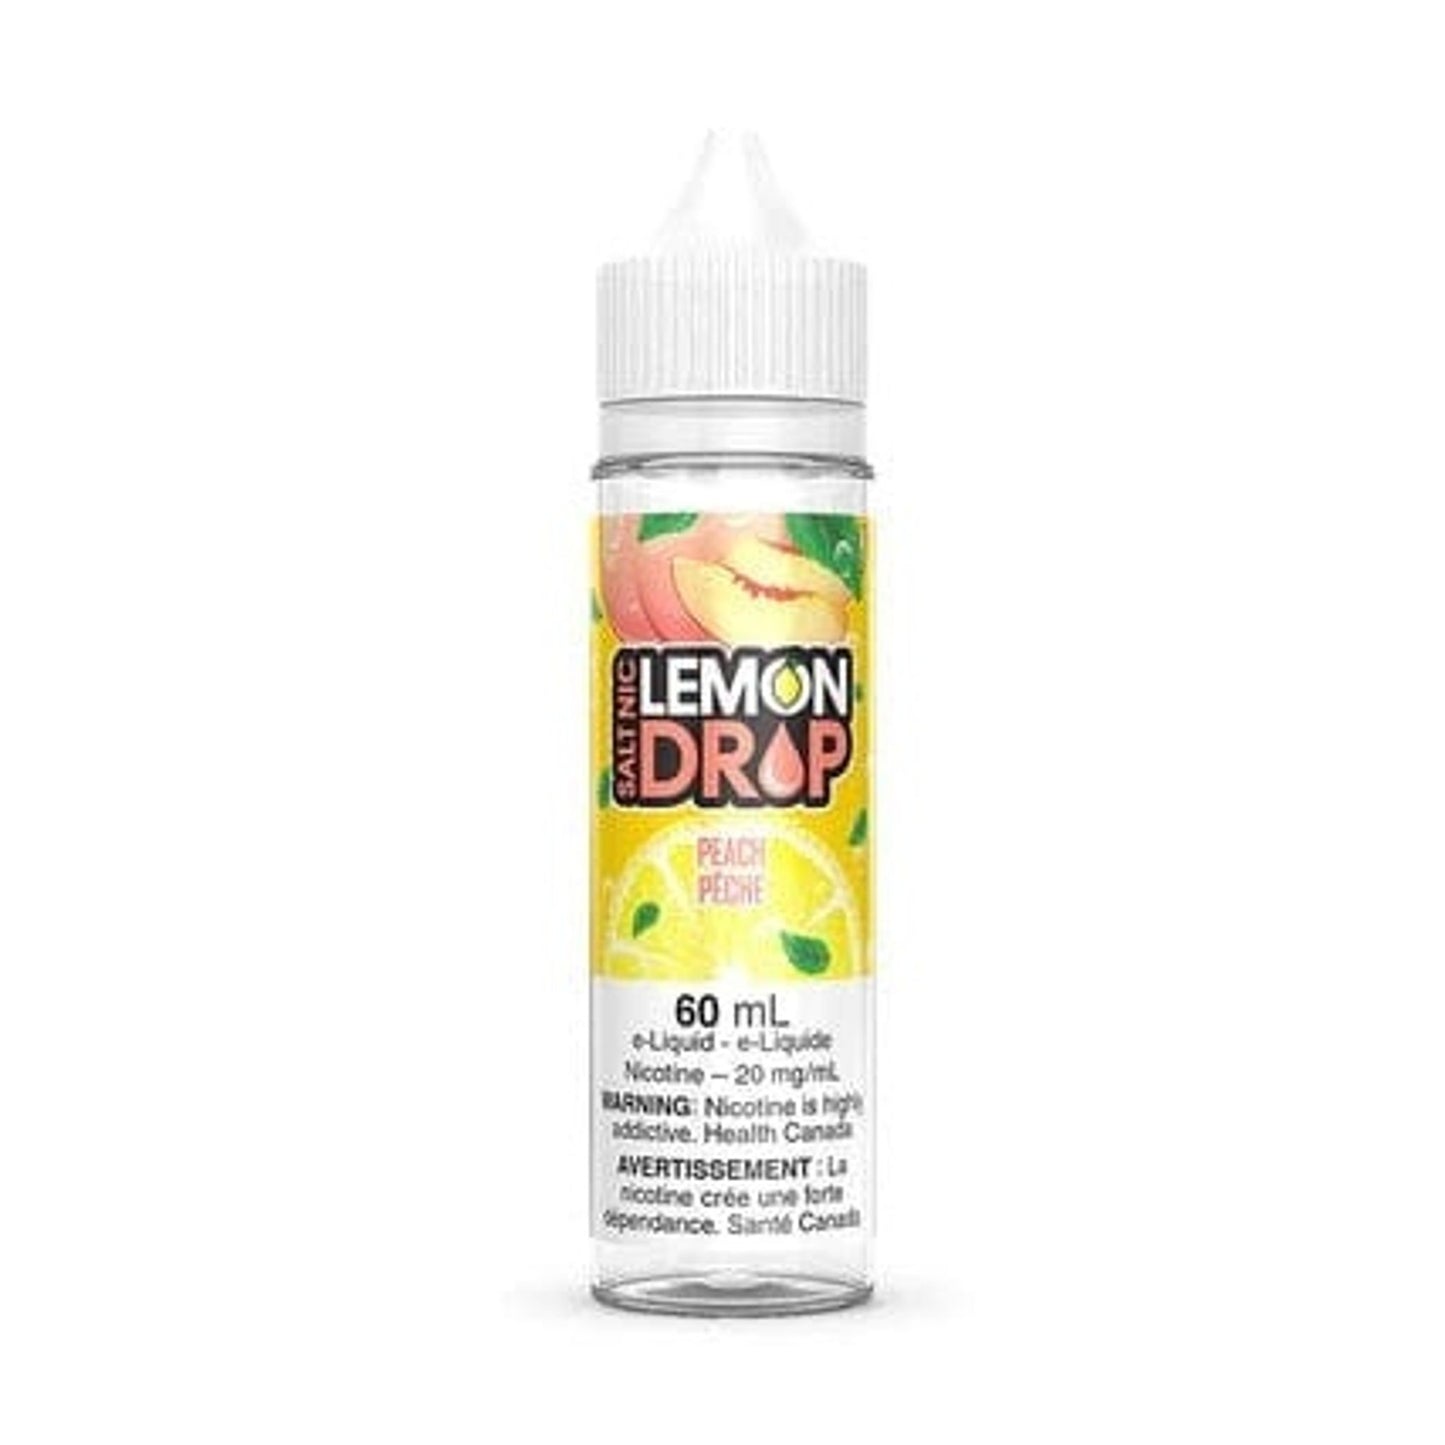 Lemon Drop - Peach 60 ml Salt